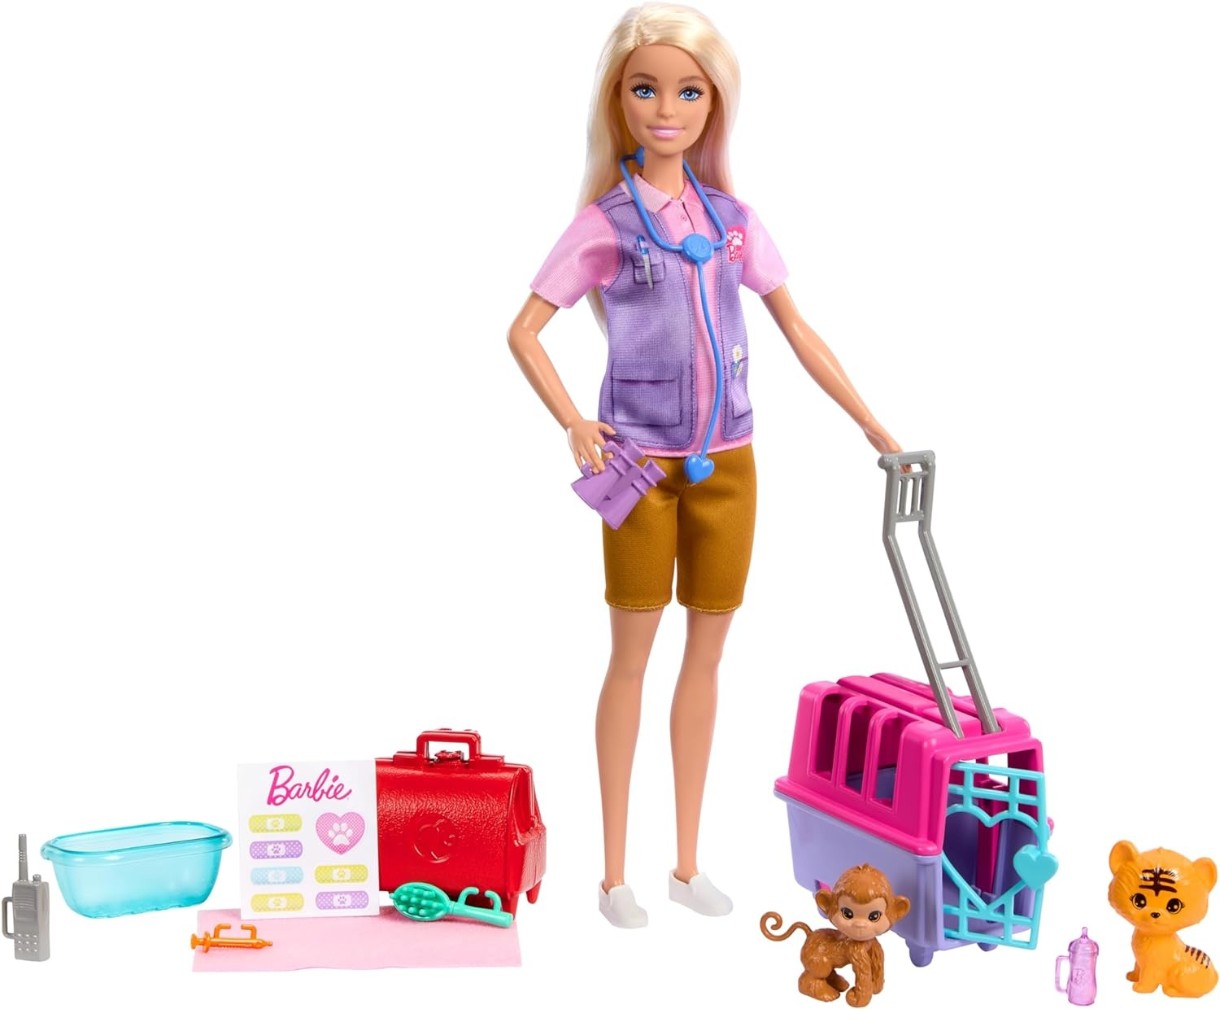 Păpușa Barbie Careers Doll & Accessories (HRG50)